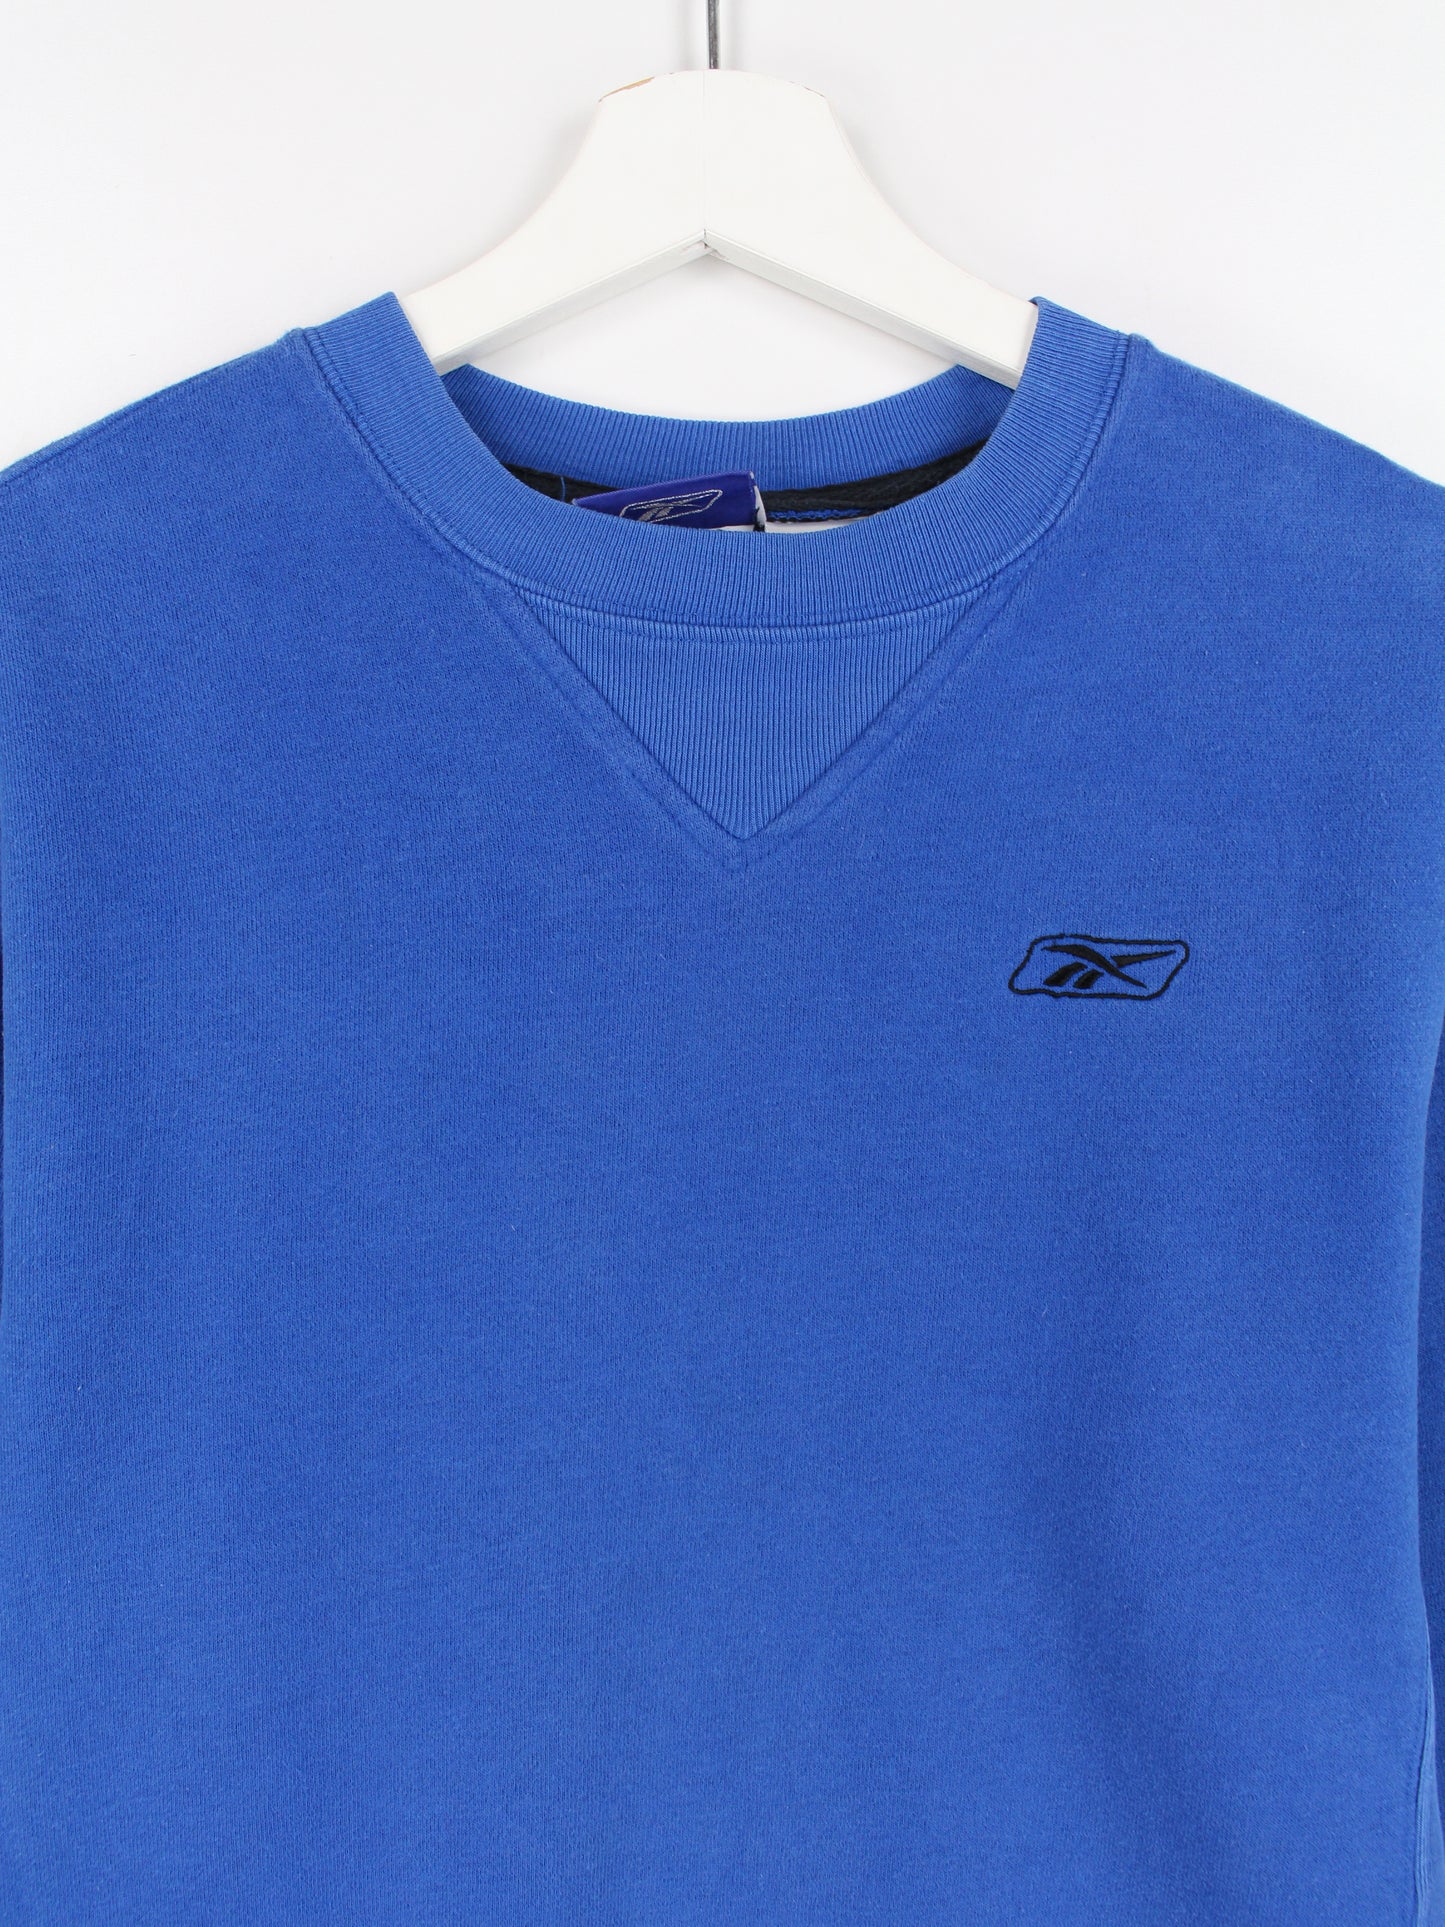 Reebok Basic Sweater Blau XS